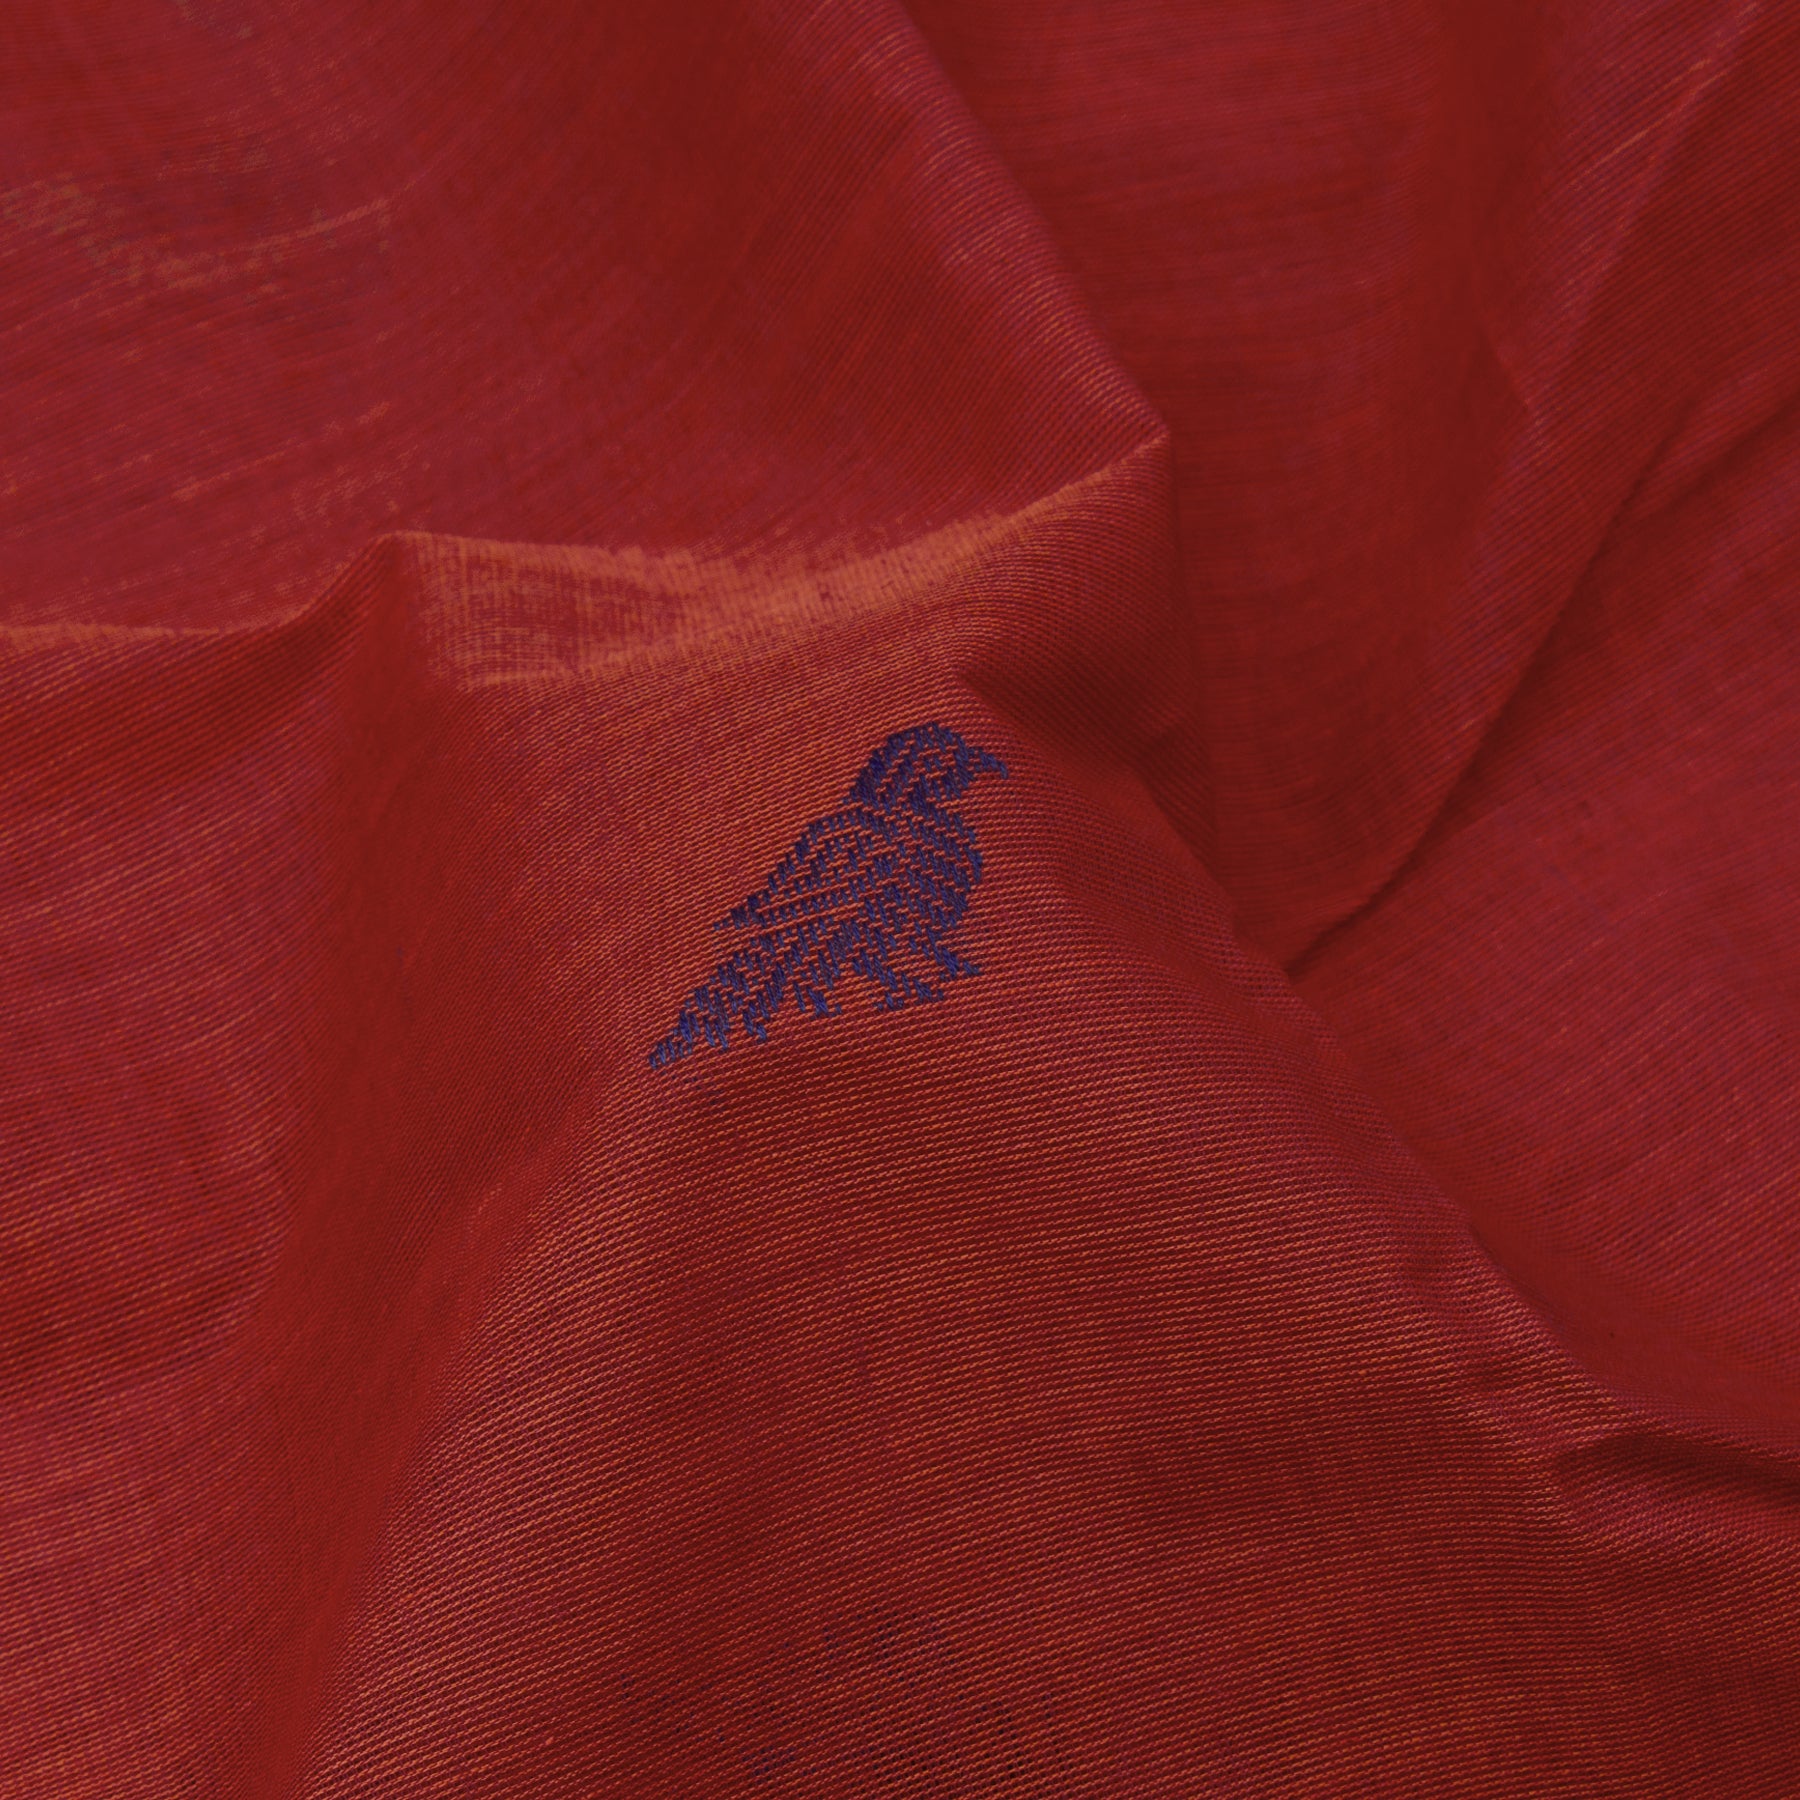 Kanakavalli Kanchi Cotton Sari 23-613-HS003-09485 - Fabric View